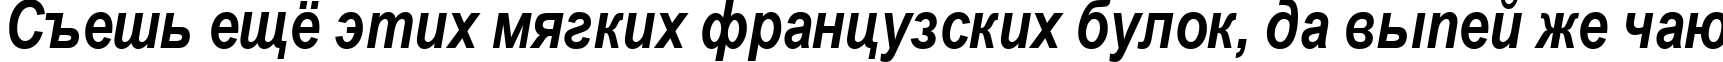 Пример написания шрифтом Arial Narrow Bold Italic текста на русском